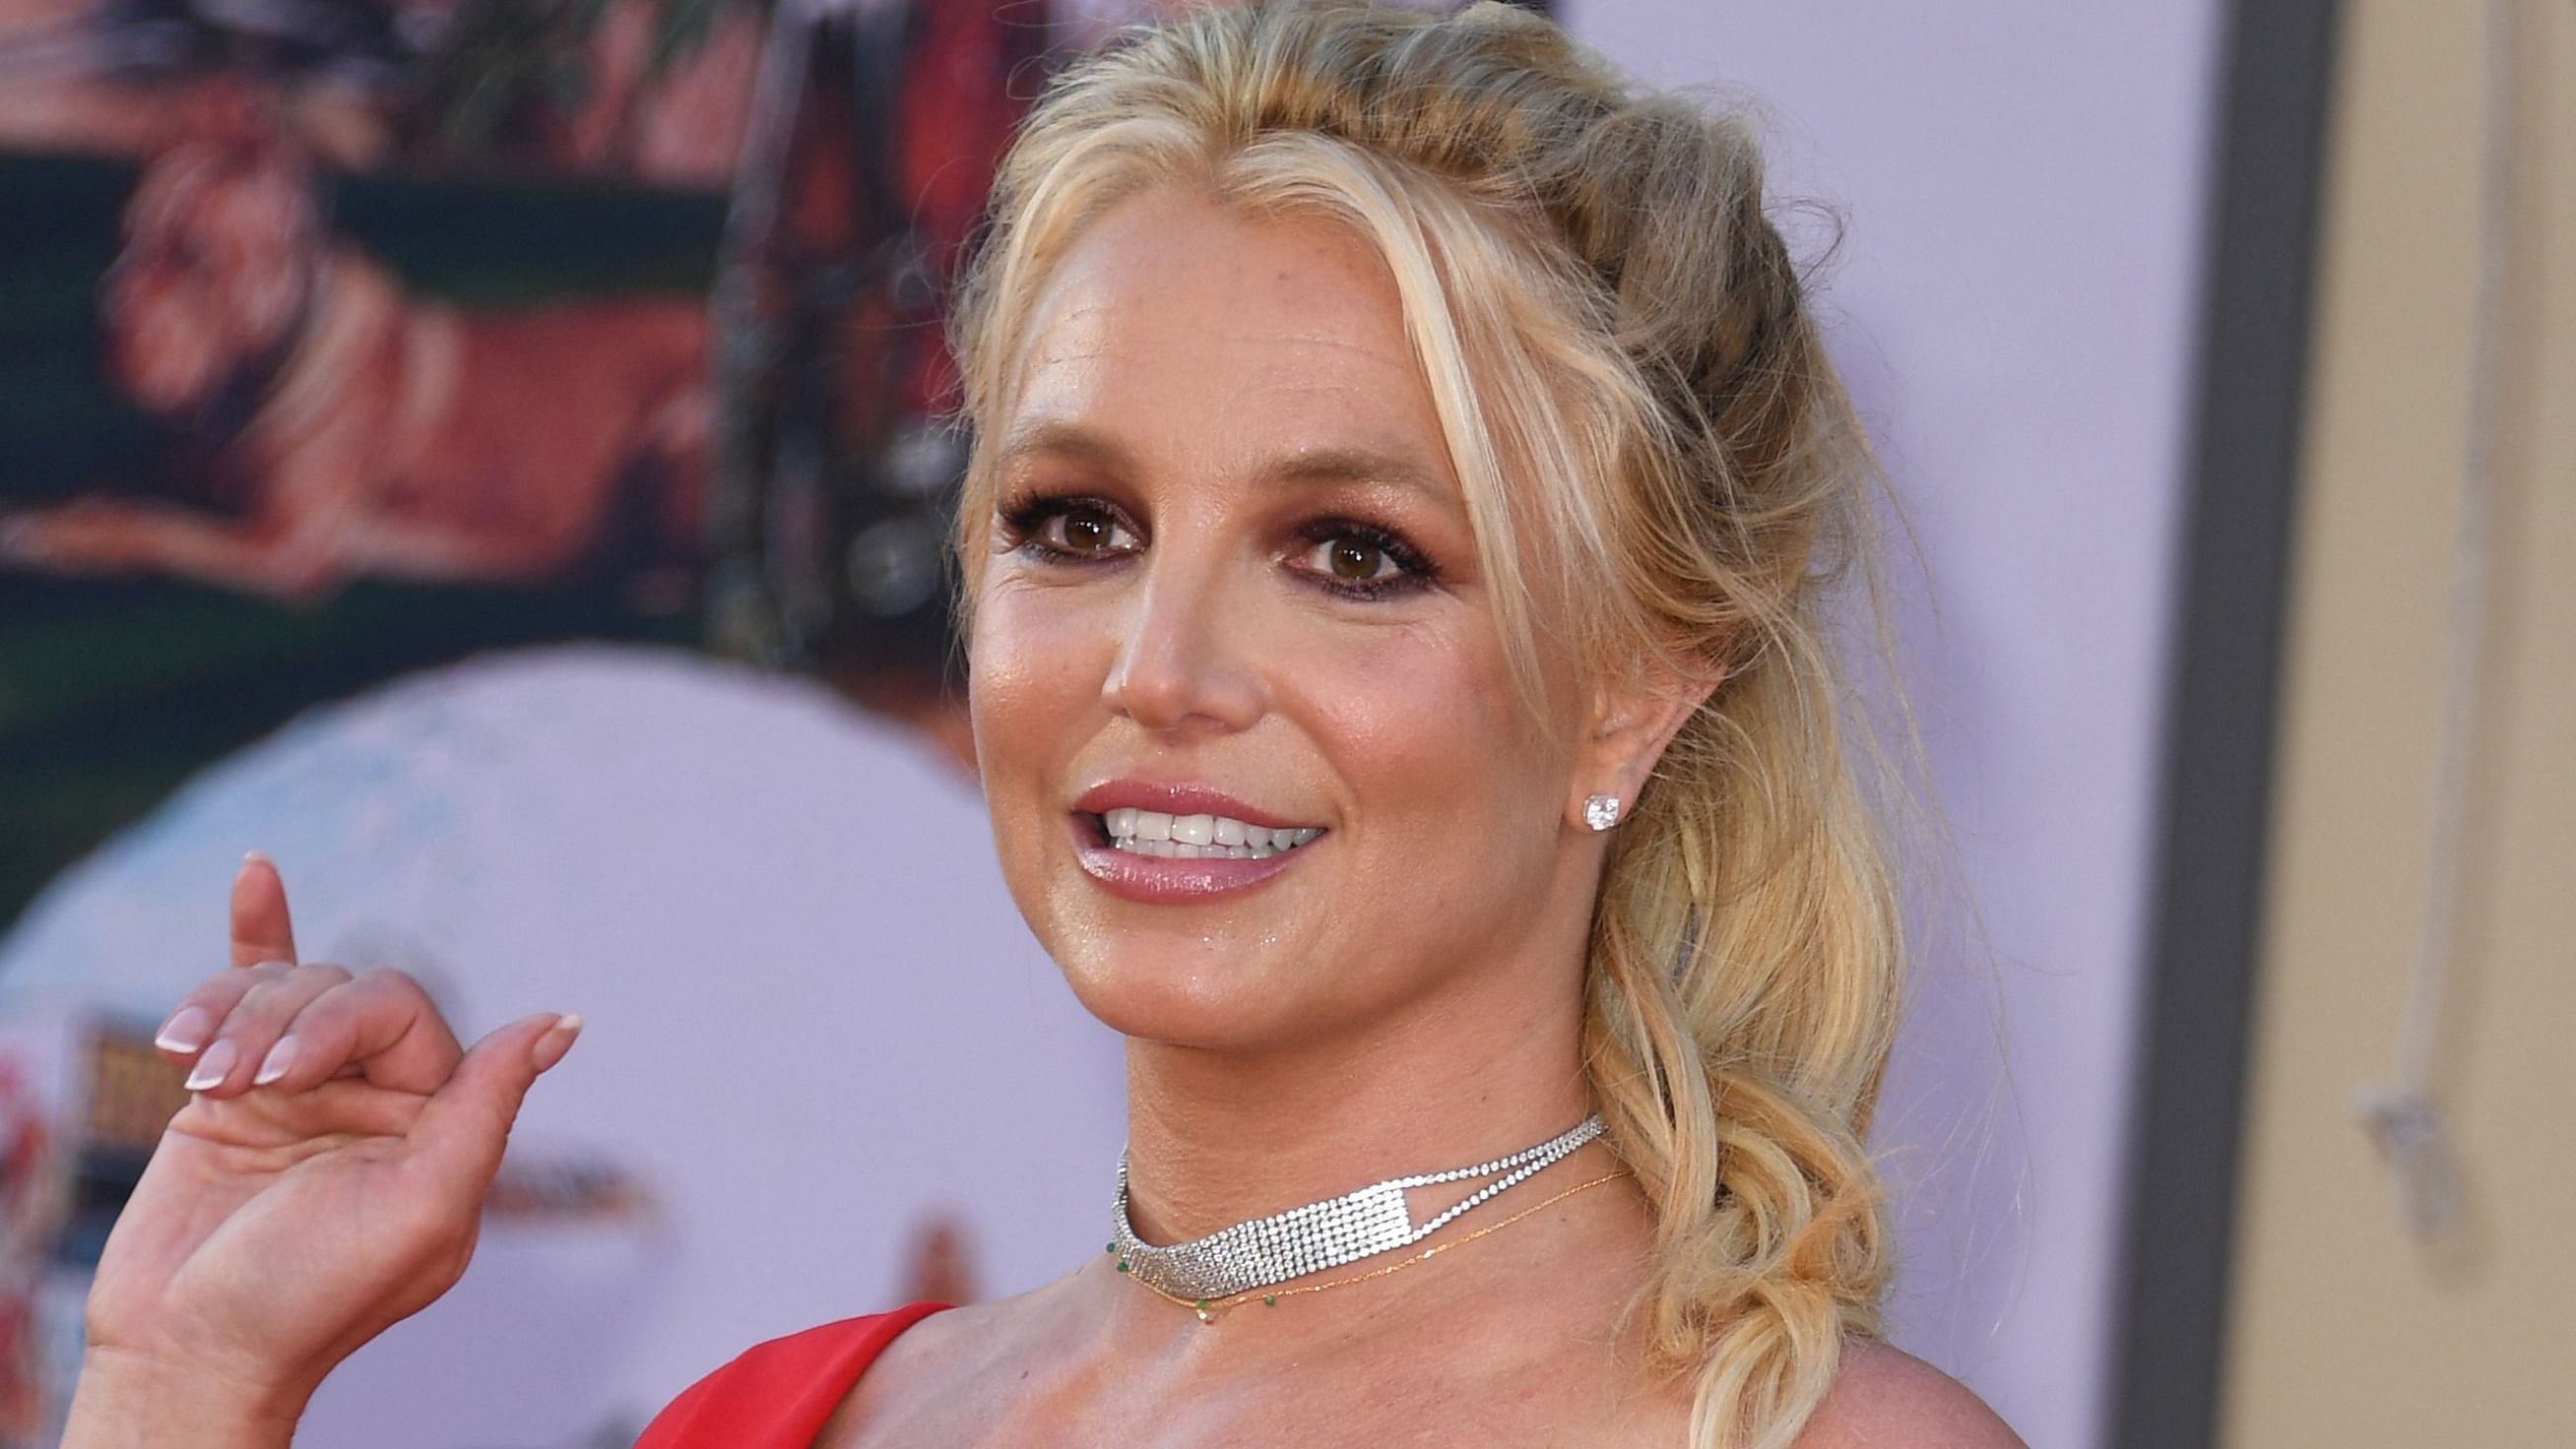 Pop star Britney Spears. Credit: AFP Photo